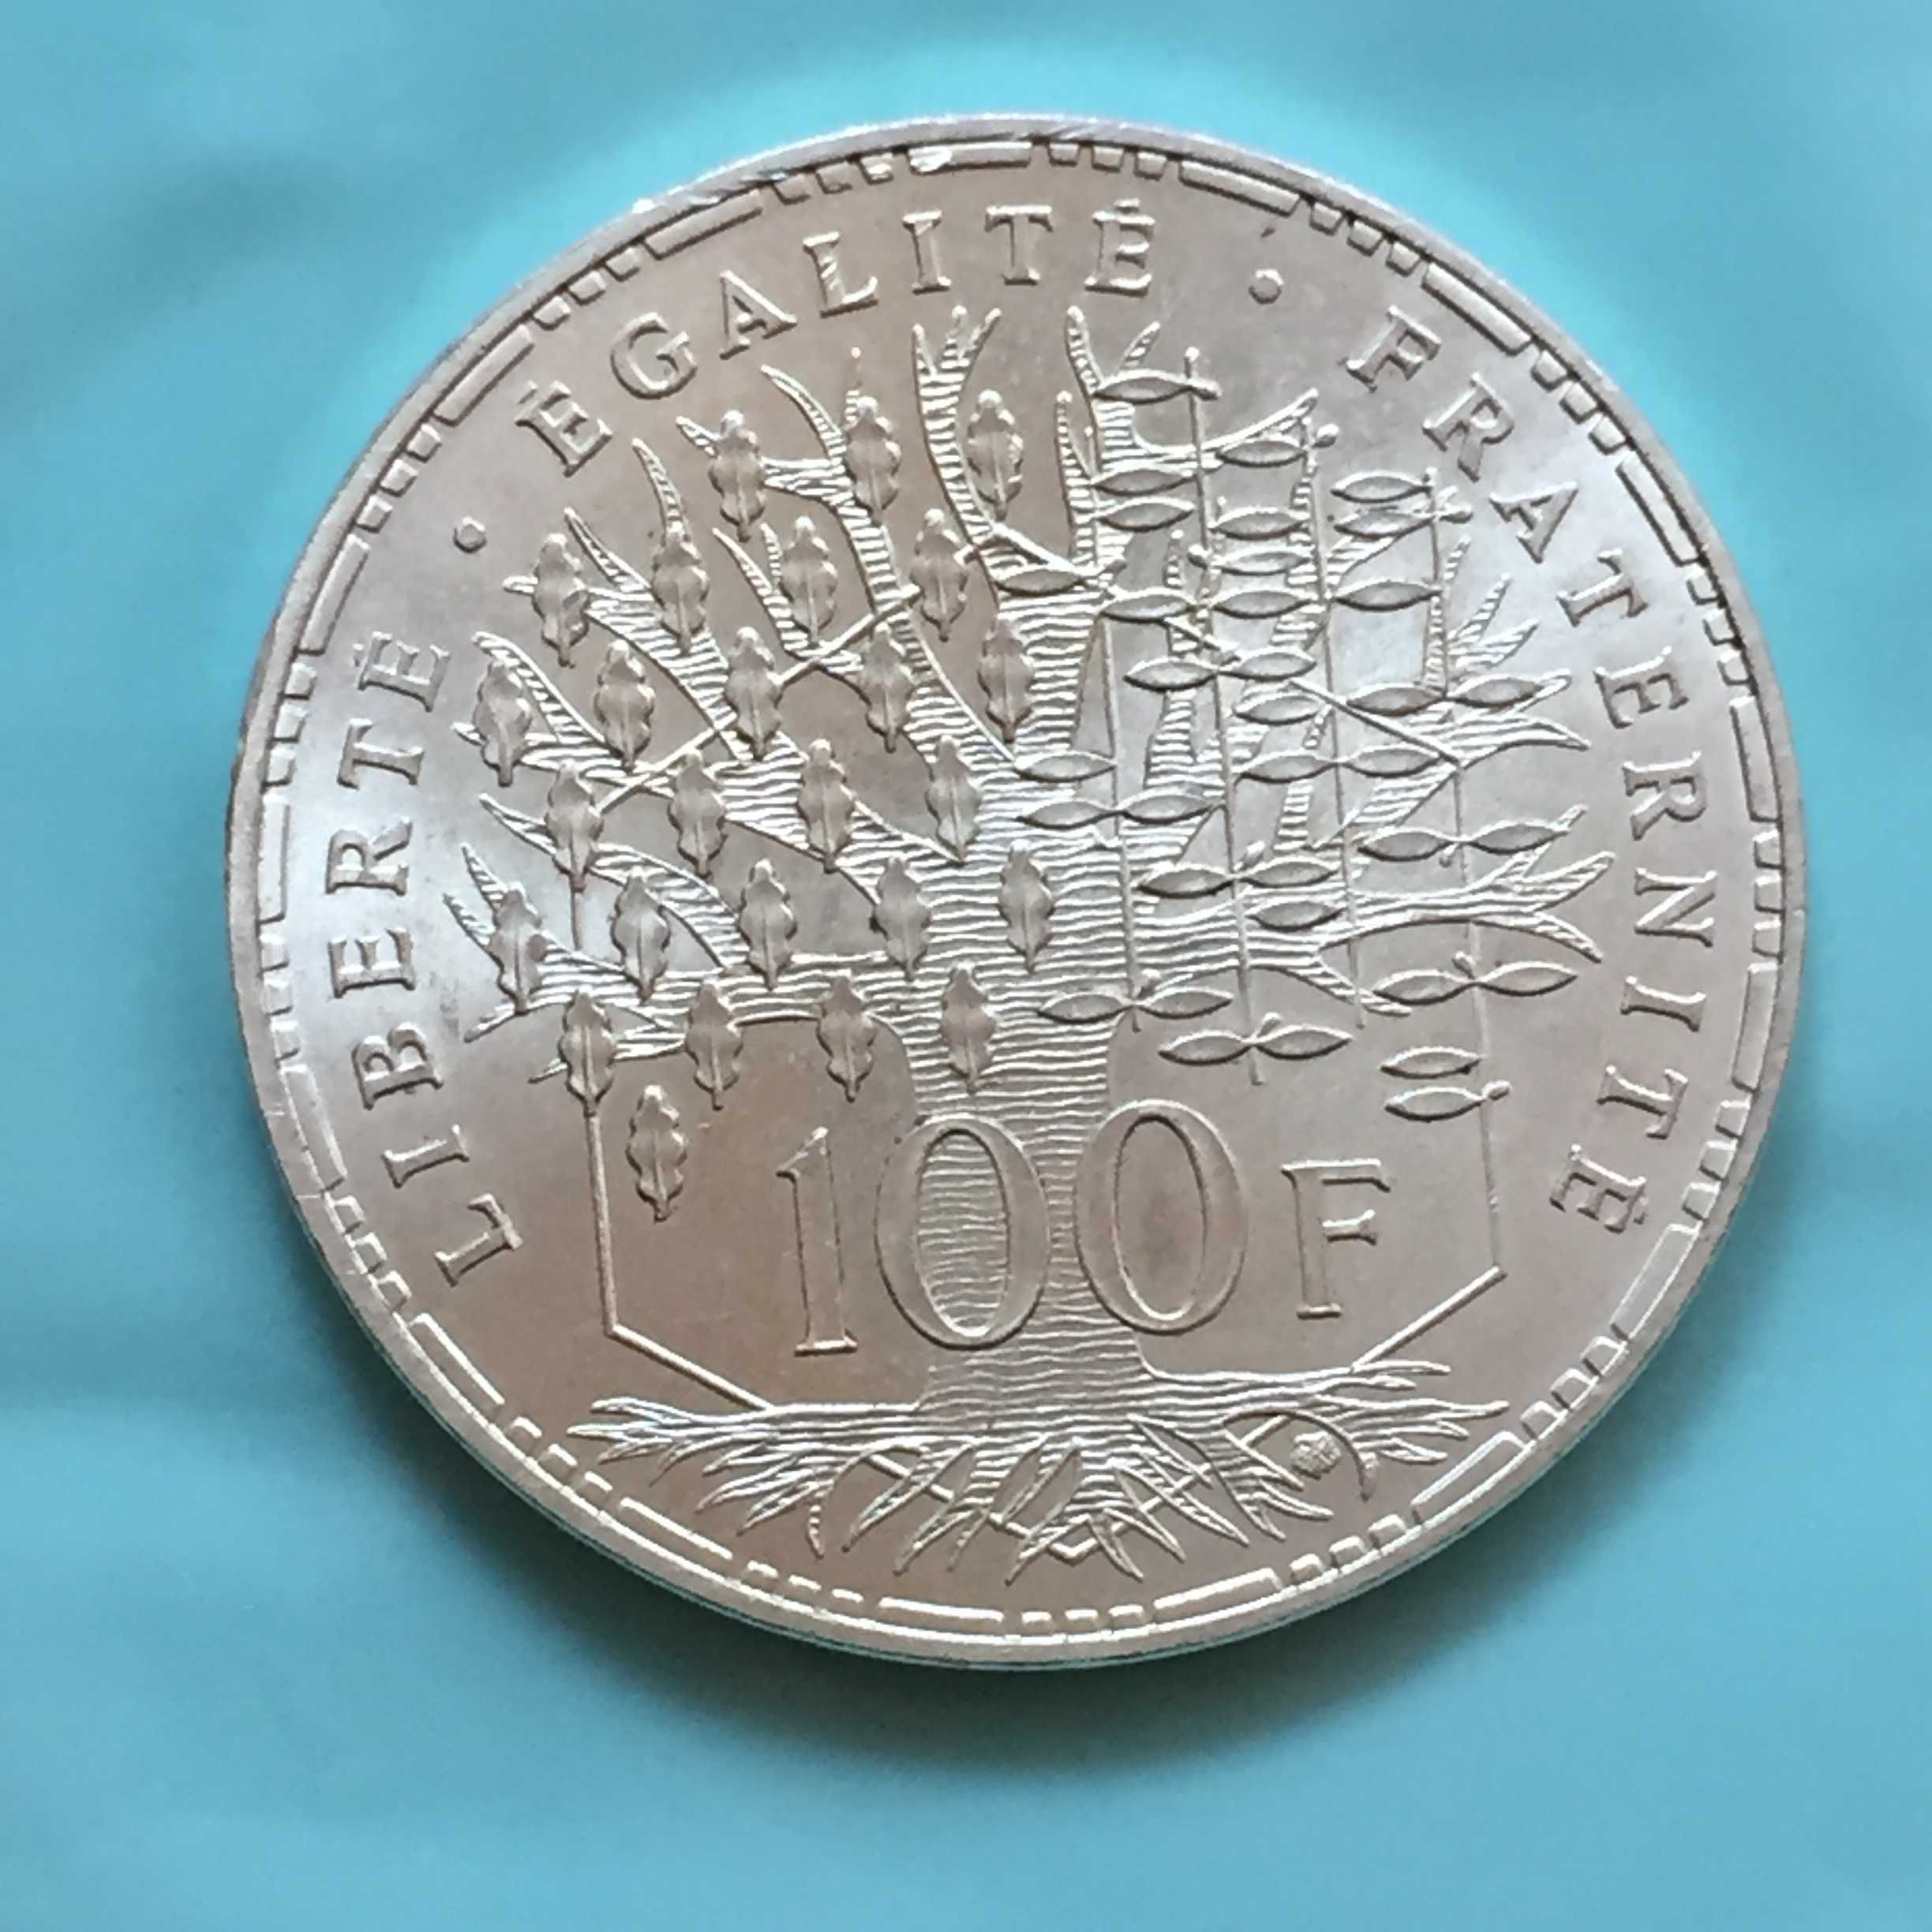 França - moeda 100 Francos 1982 - Pantheon - prata